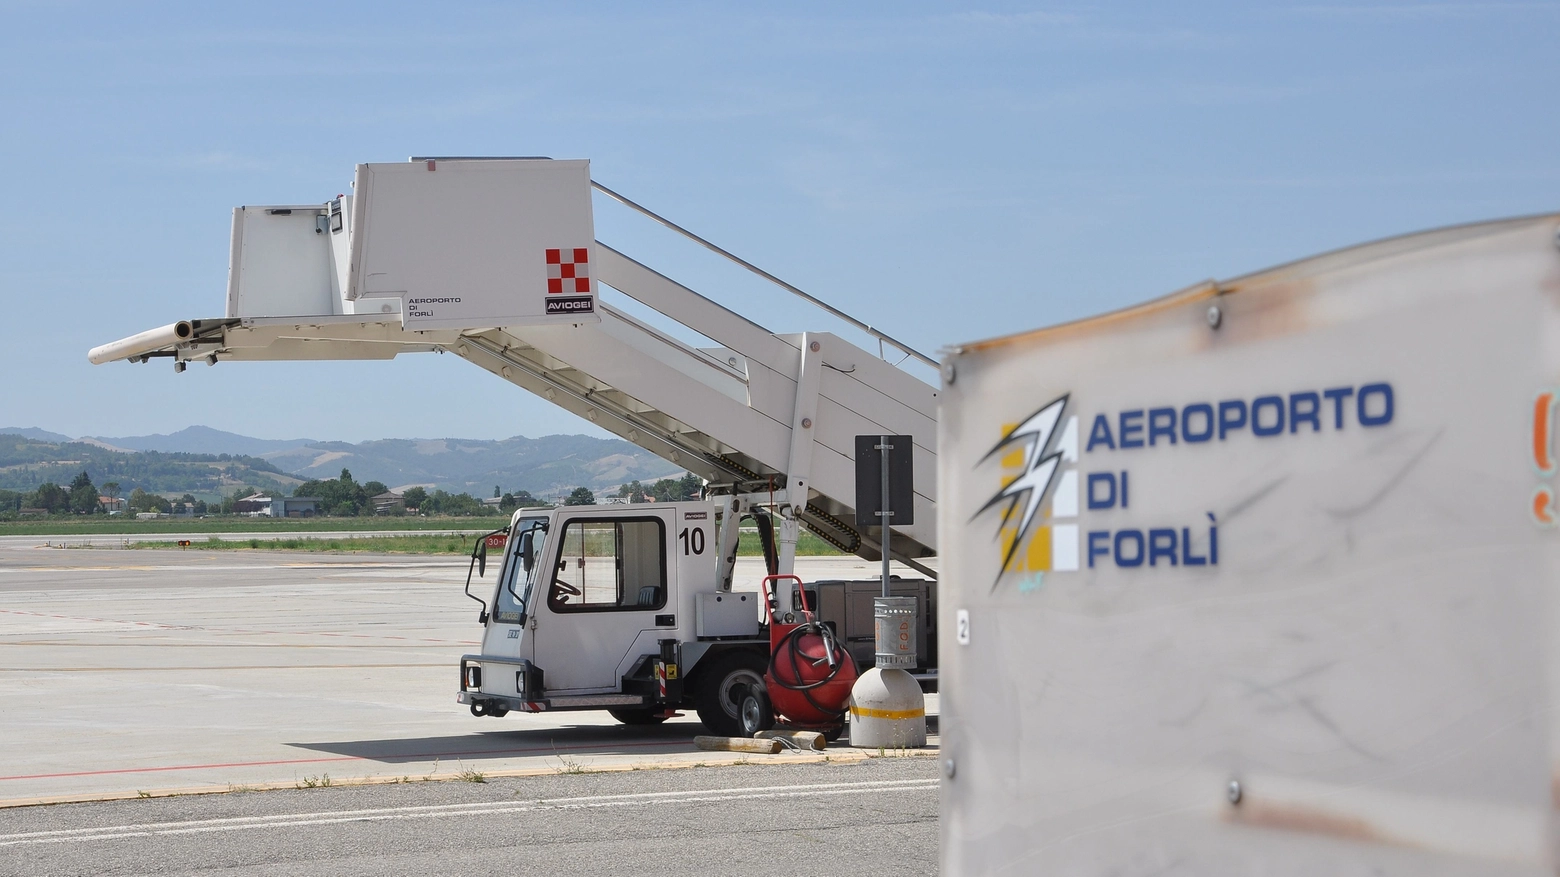 Aeroporto Ridolfi di Forlì (foto Frasca)